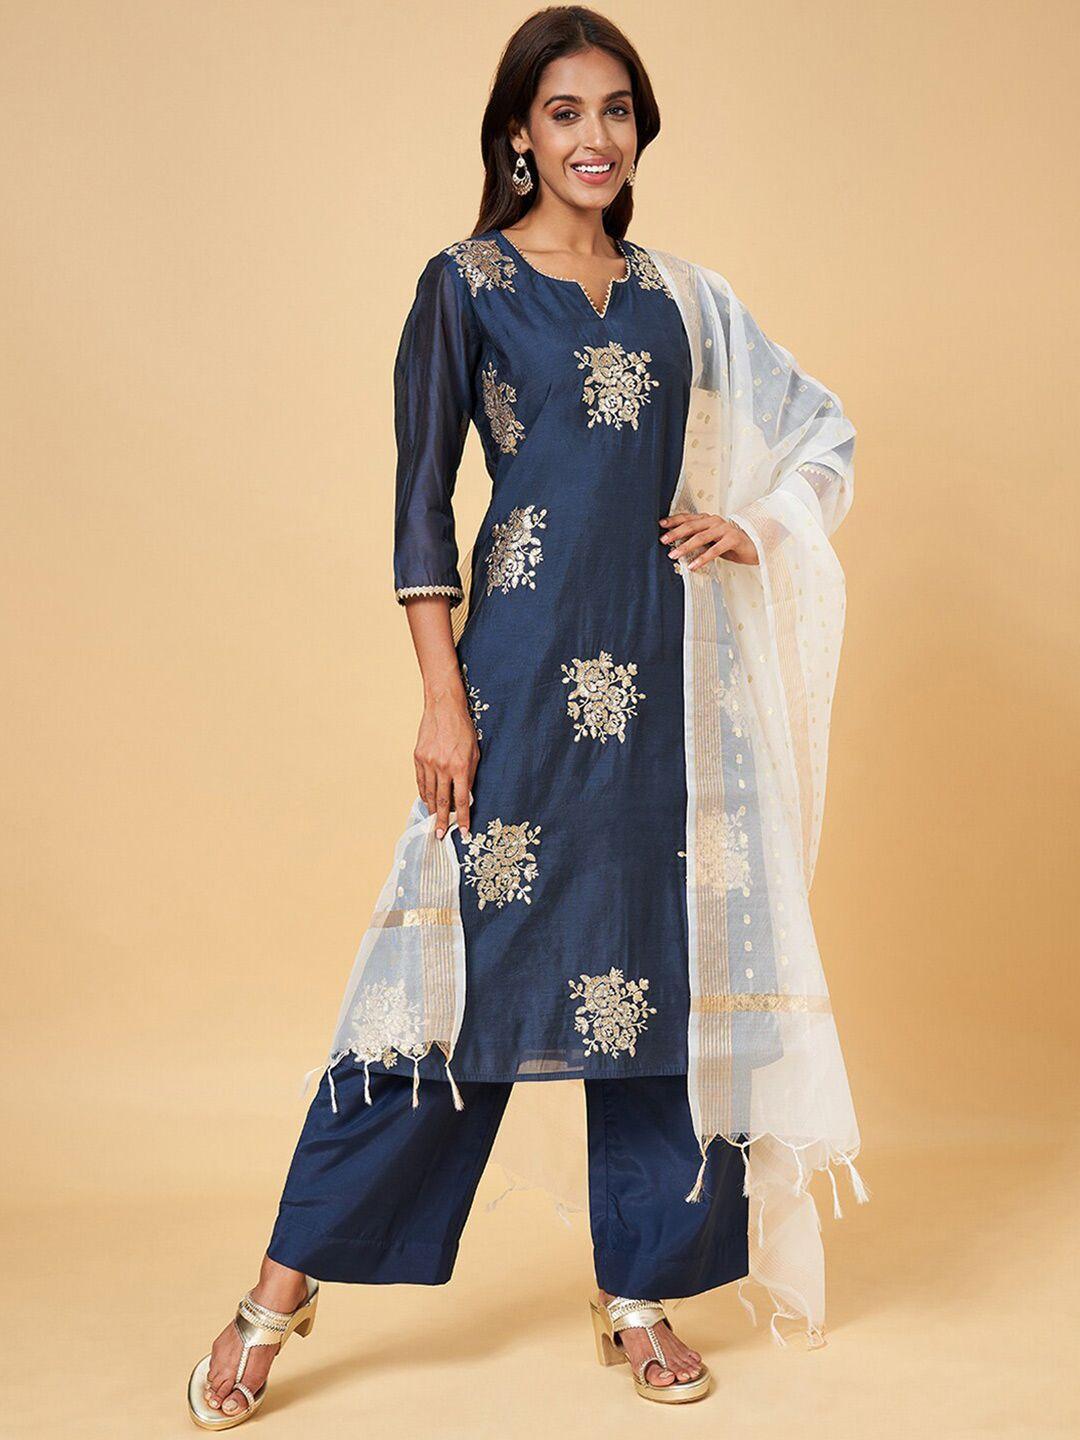 rangmanch by pantaloons ethnic motifs woven design dupatta with zari